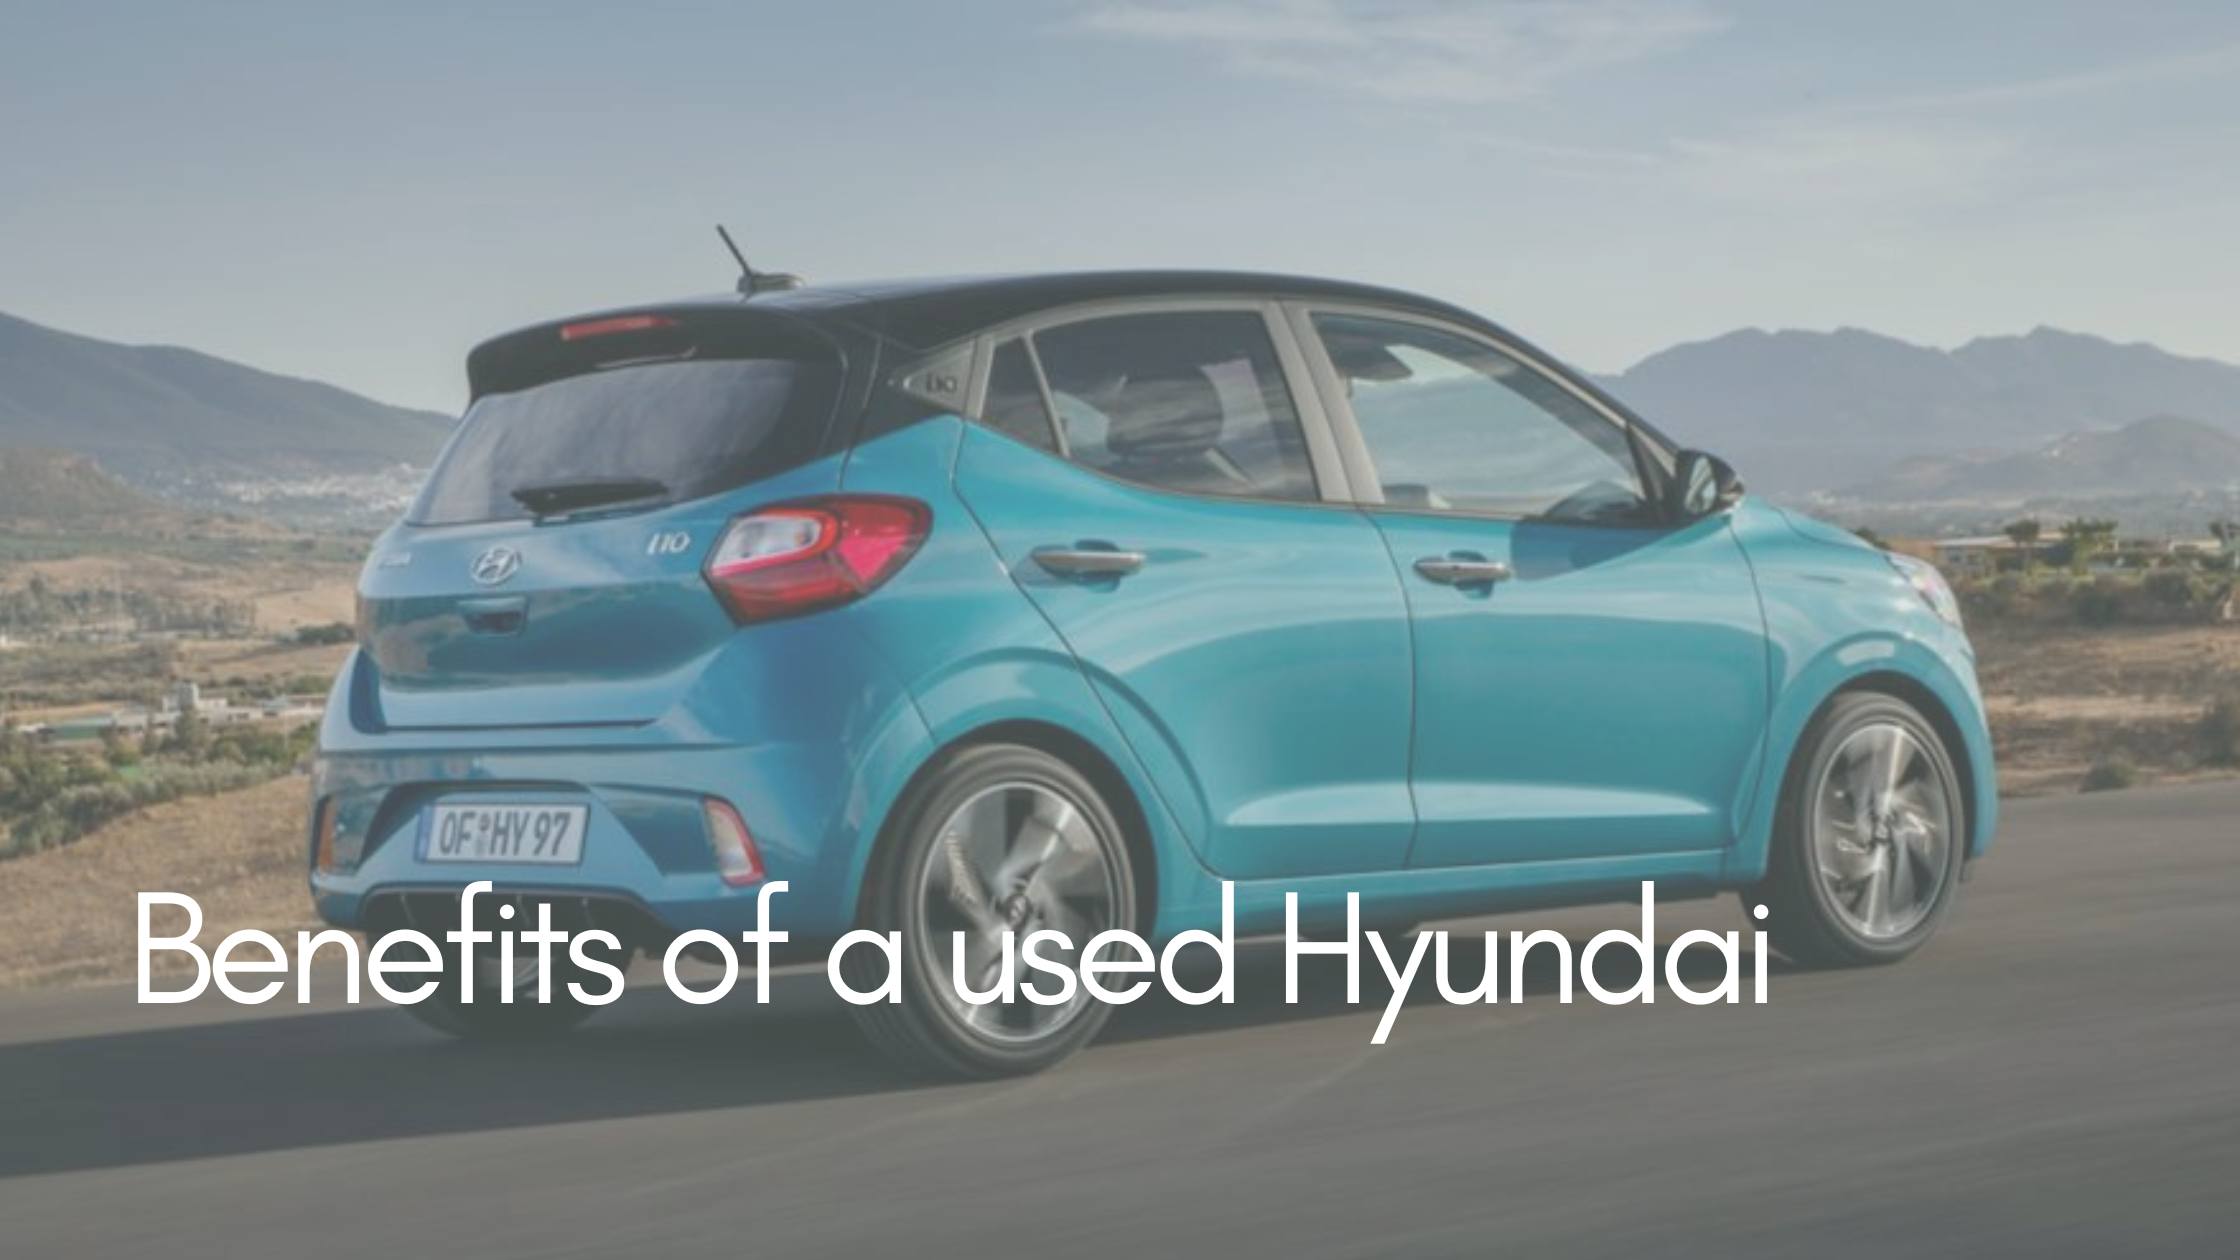 Benefits of a used Hyundai